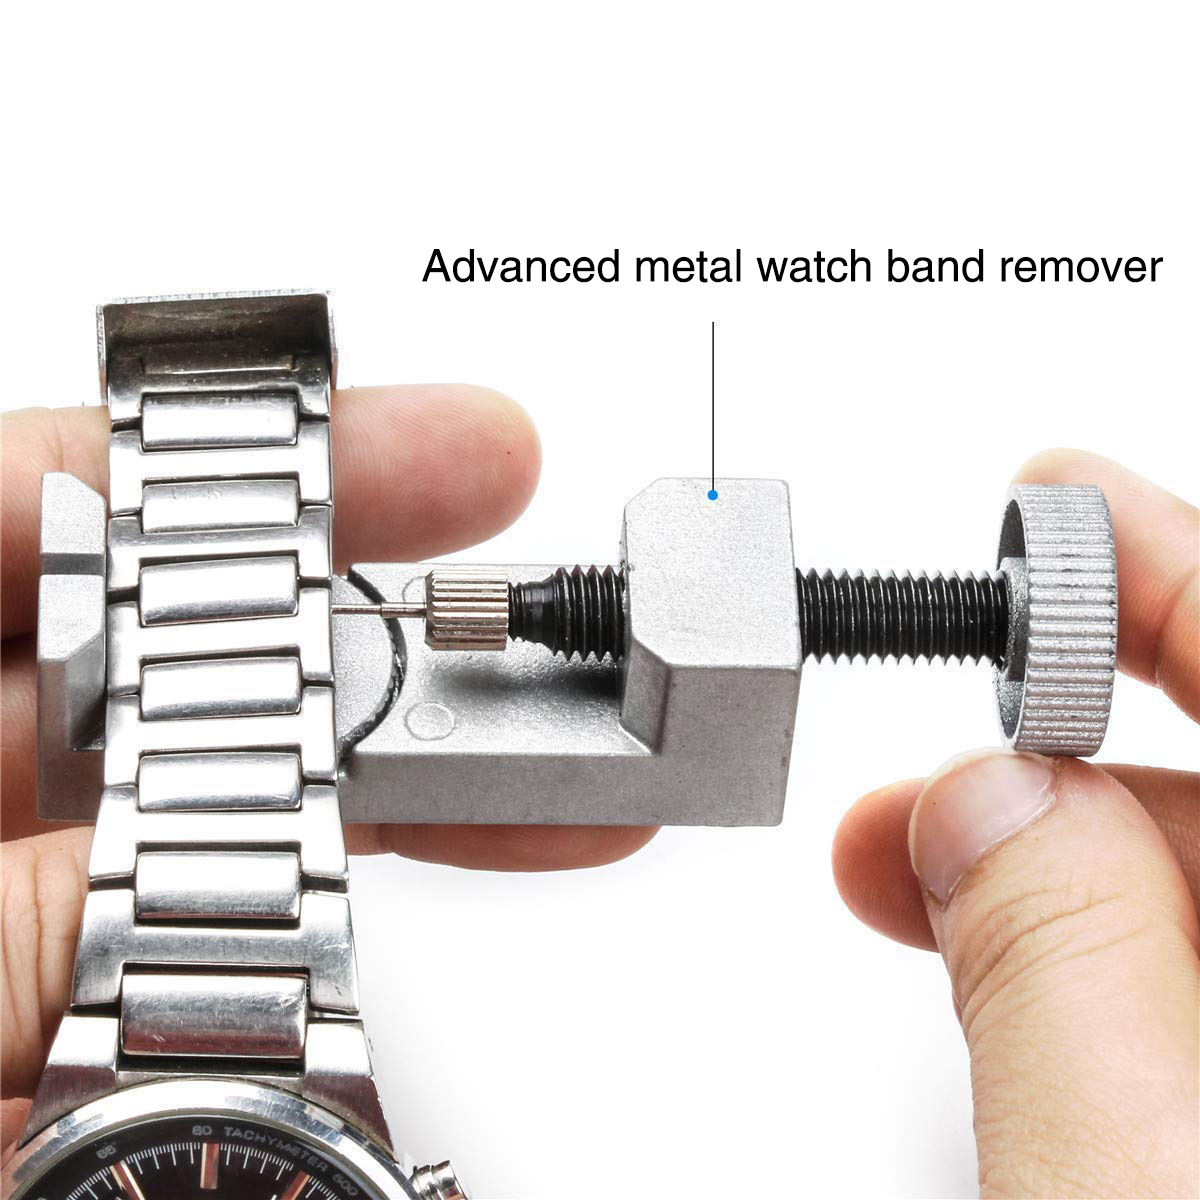 112pcs-Watch-Repair-Tools-Kit-With-Carrying-Bag-1417417